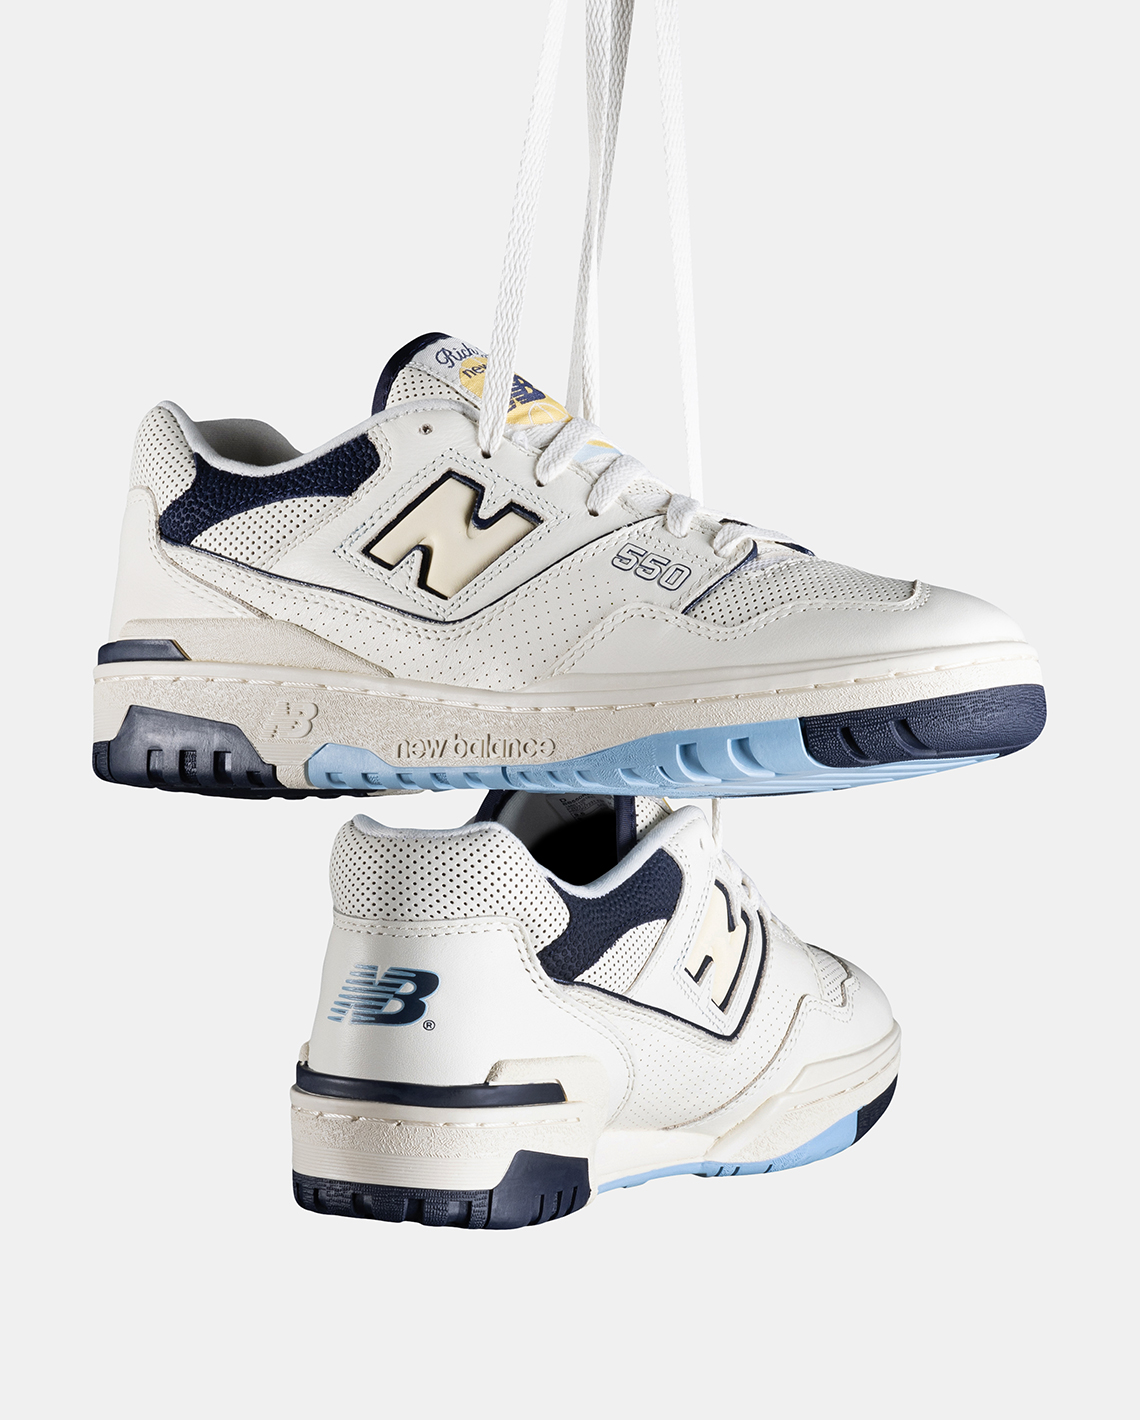 Rich Paul New Balance 550 BB550RP1 Release Date | SneakerNews.com